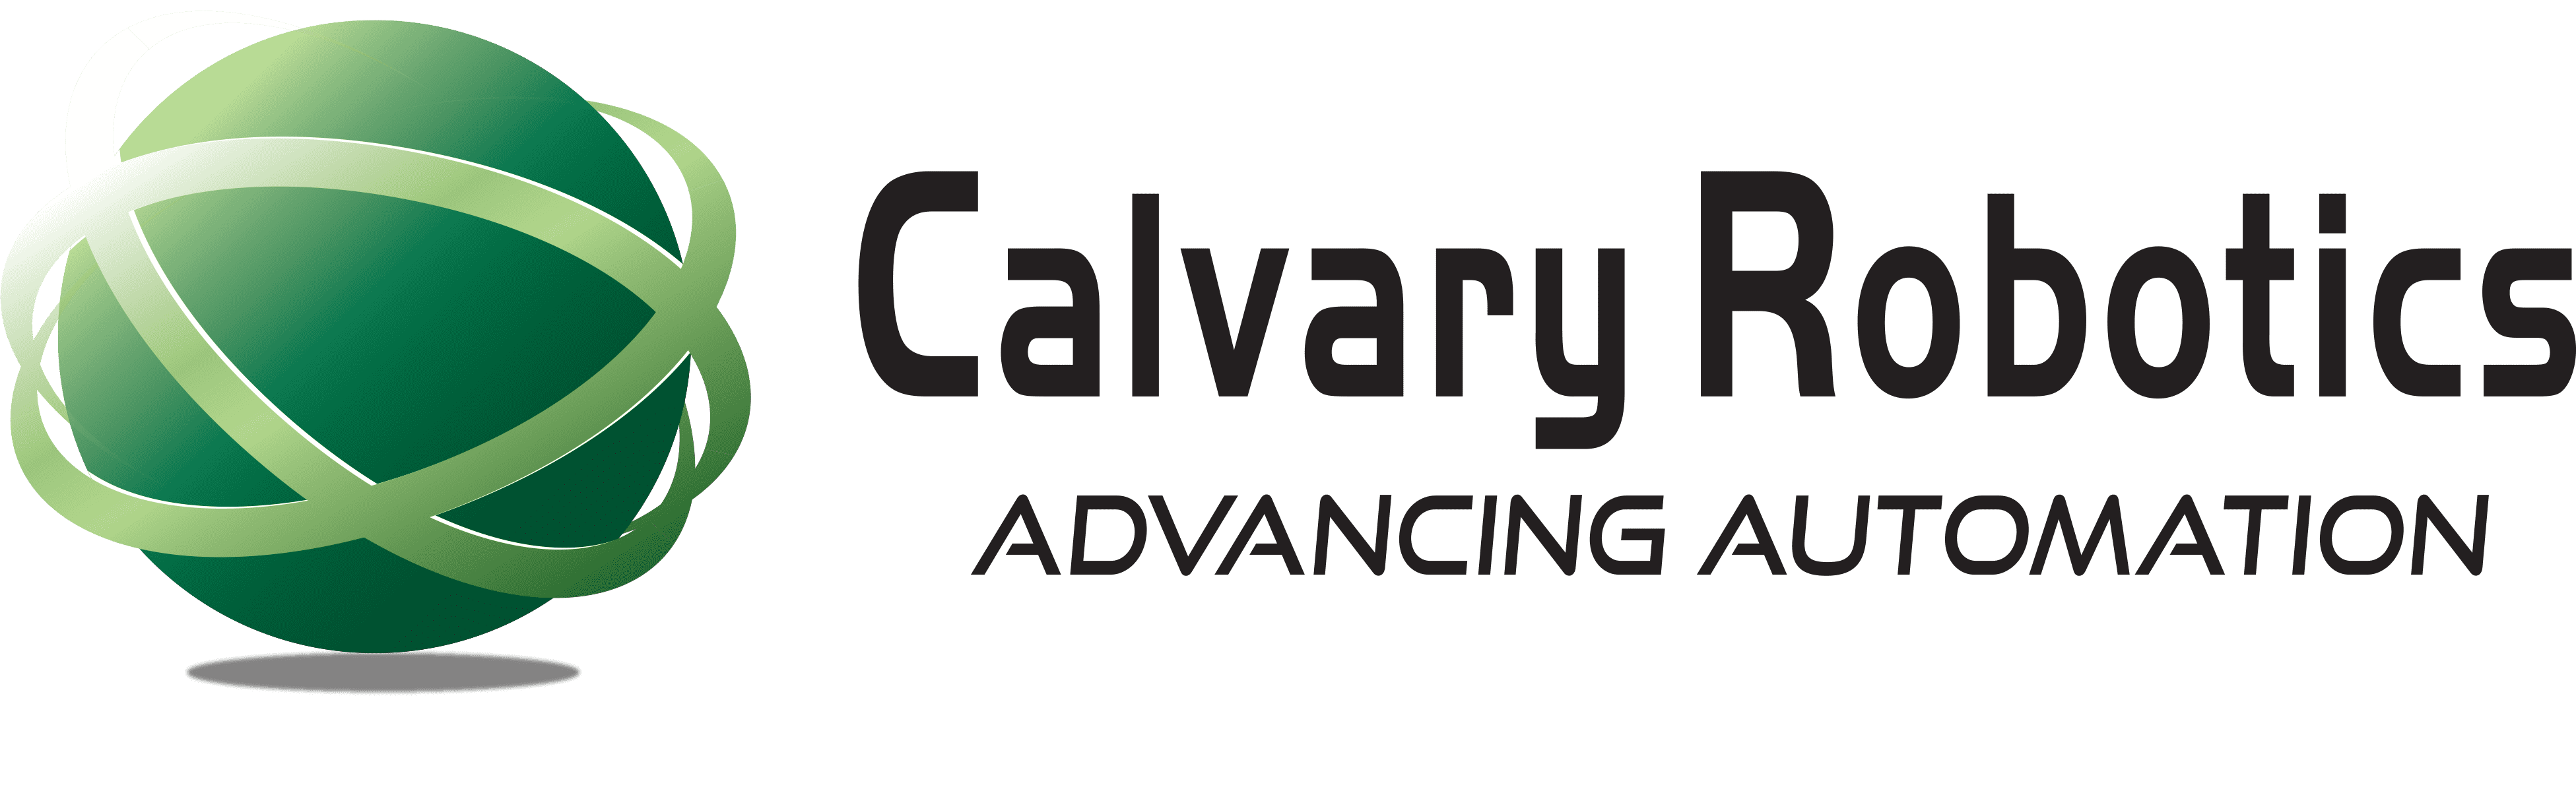 Calvary_Robotics_Logo_2016.png#asset:1090